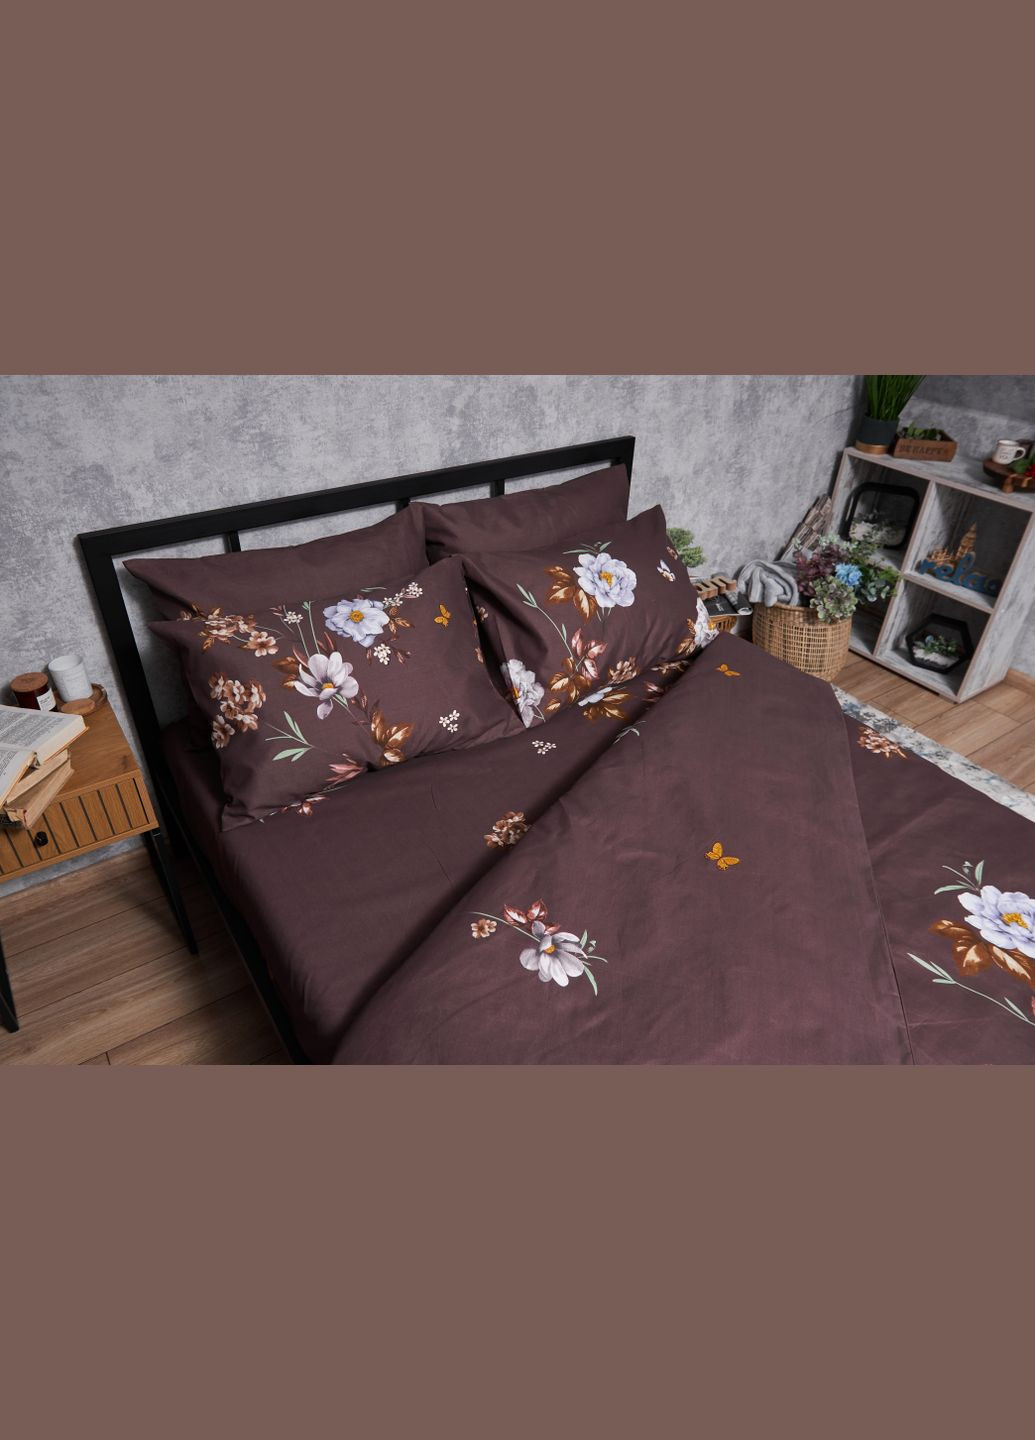 Комплект постельного белья Микросатин Premium «» полуторный евро 160х220 наволочки 2х40х60 (MS-820005025) Moon&Star floral mocha (293148273)